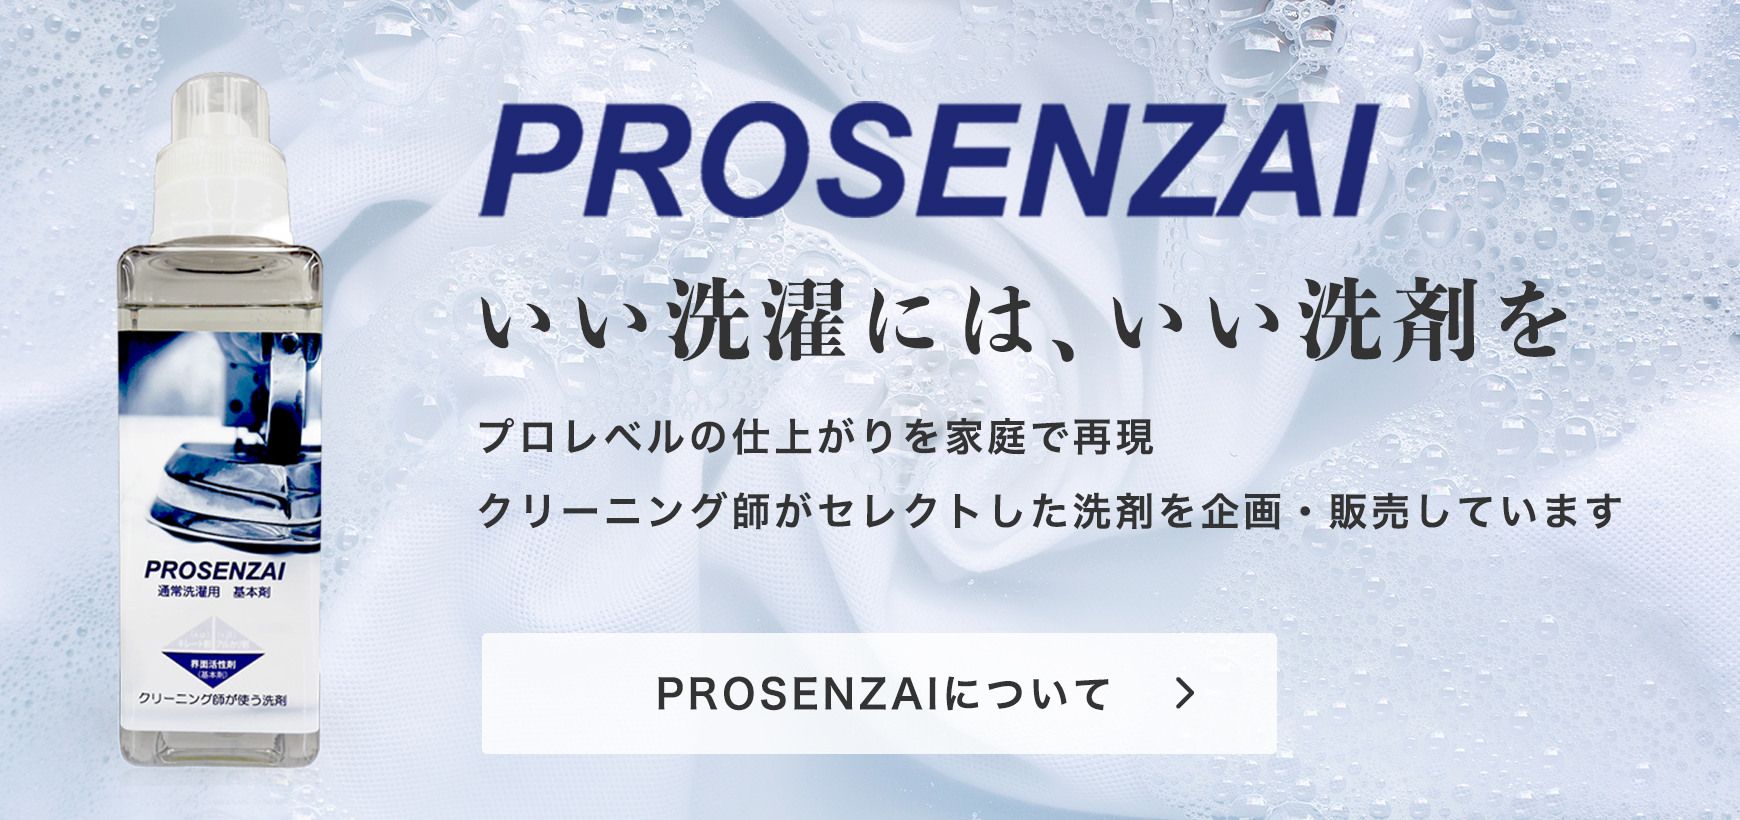 PROSENZAI プロレベルの仕上がりを家庭で再現 クリーニング師がセレクトした洗剤を企画・販売しています